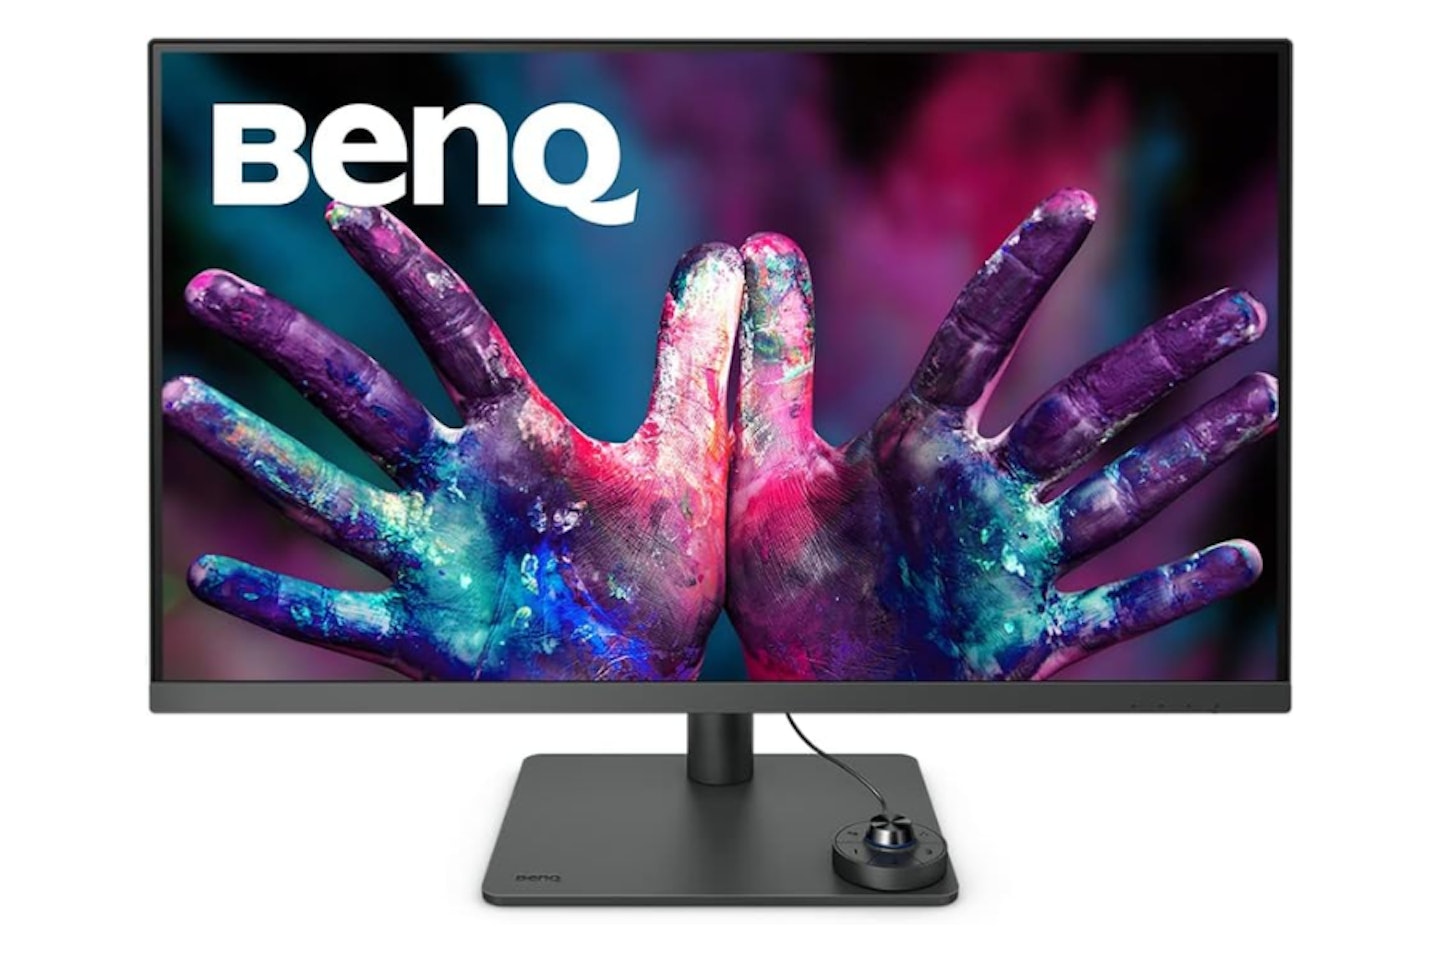 BenQ PD3205U 31.5” 4K Monitor - one of the best monitors for Mac Mini